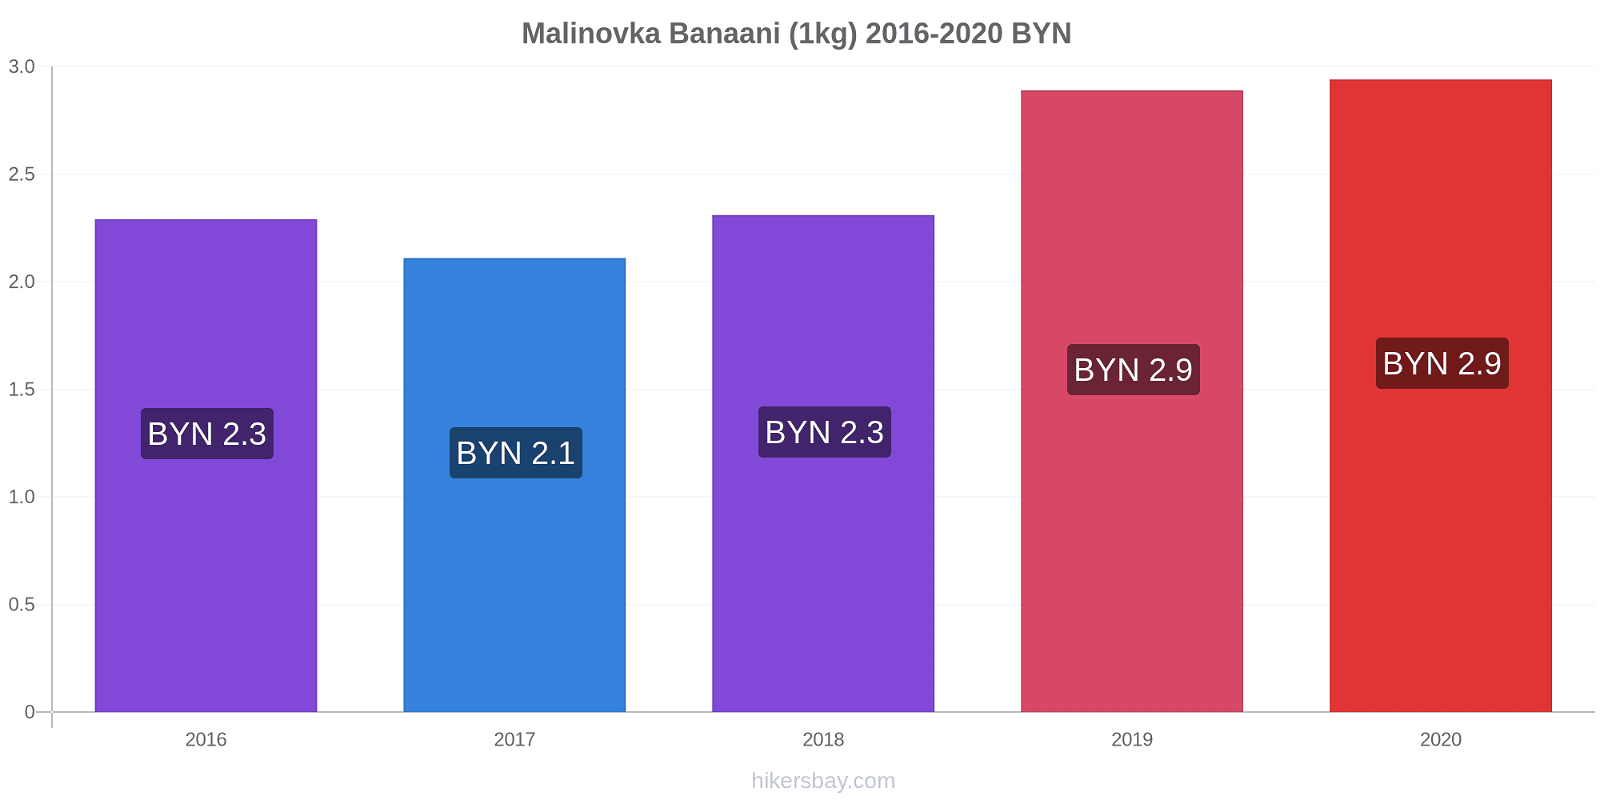 Malinovka hintojen muutokset Banaani (1kg) hikersbay.com